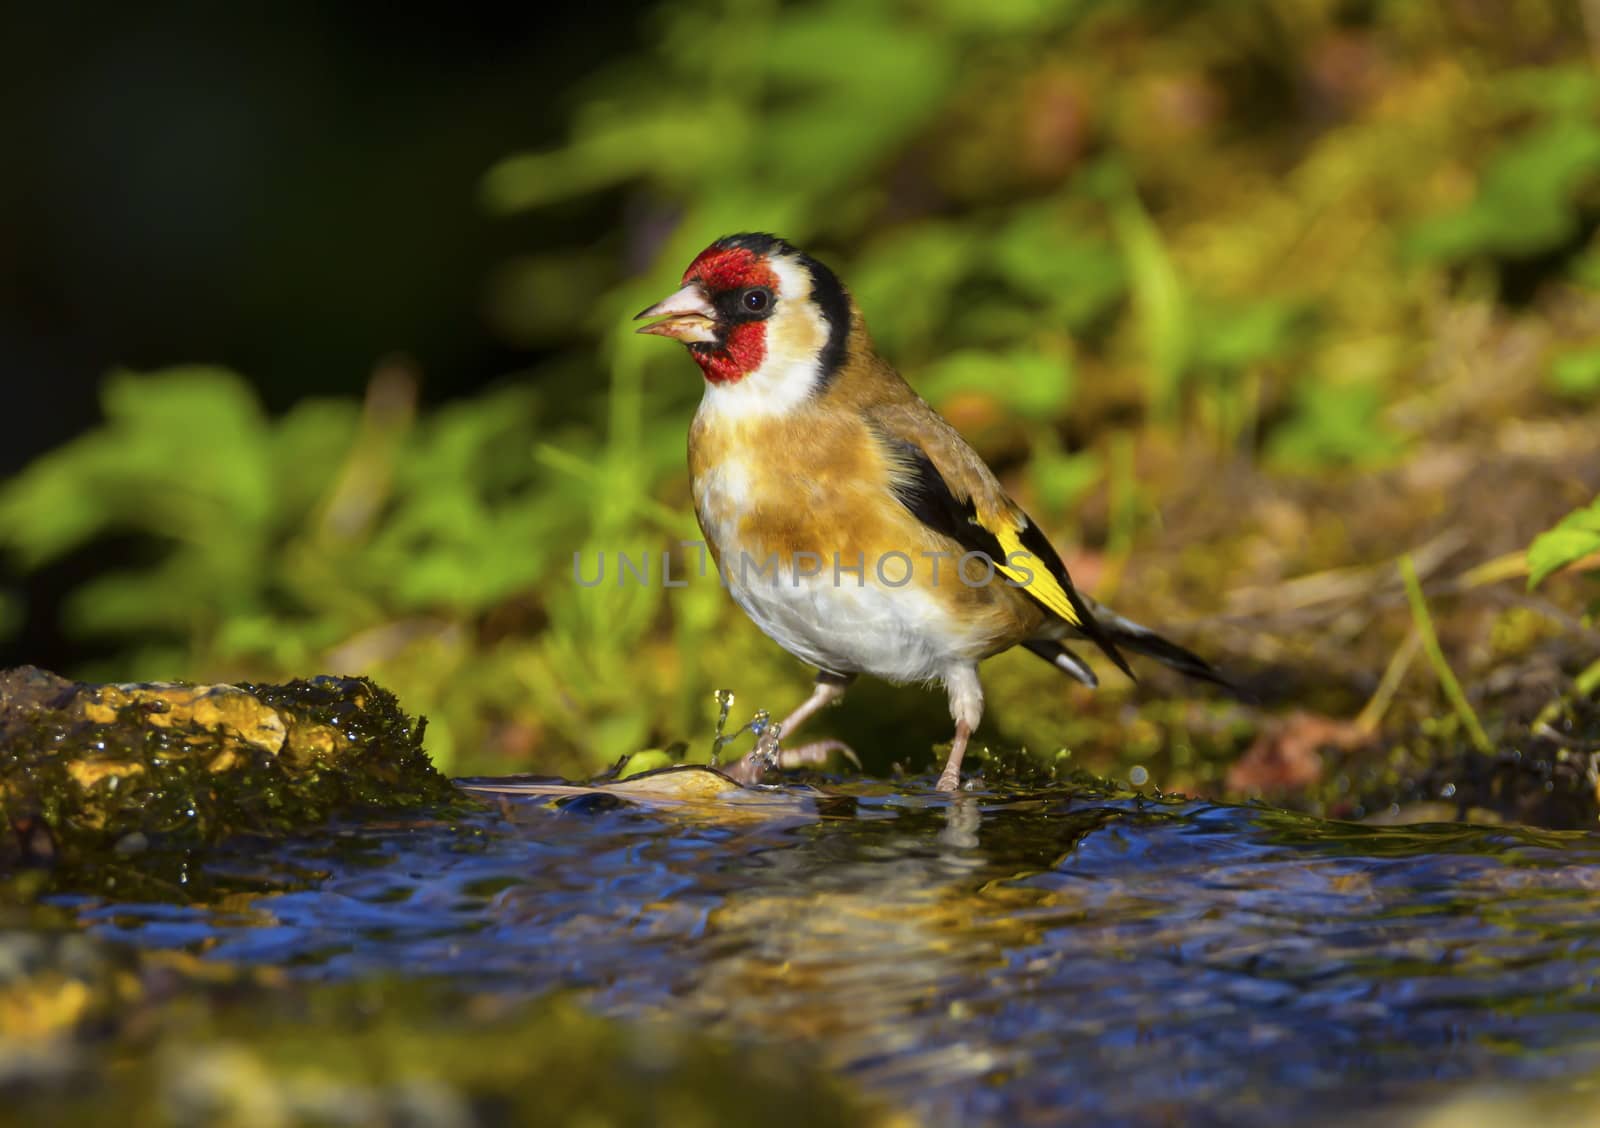 European goldfinch, carduelis carduelis, in the water